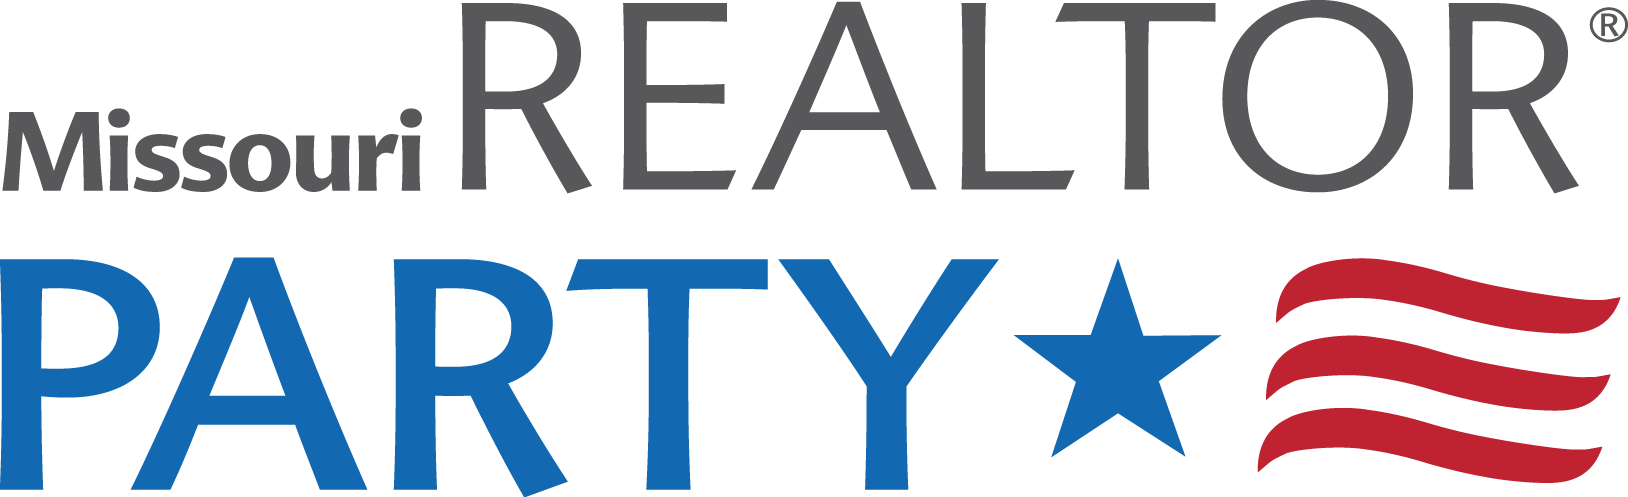 Missouri Realtor Party Graphic Logo - Missouri Realtors (1628x497)